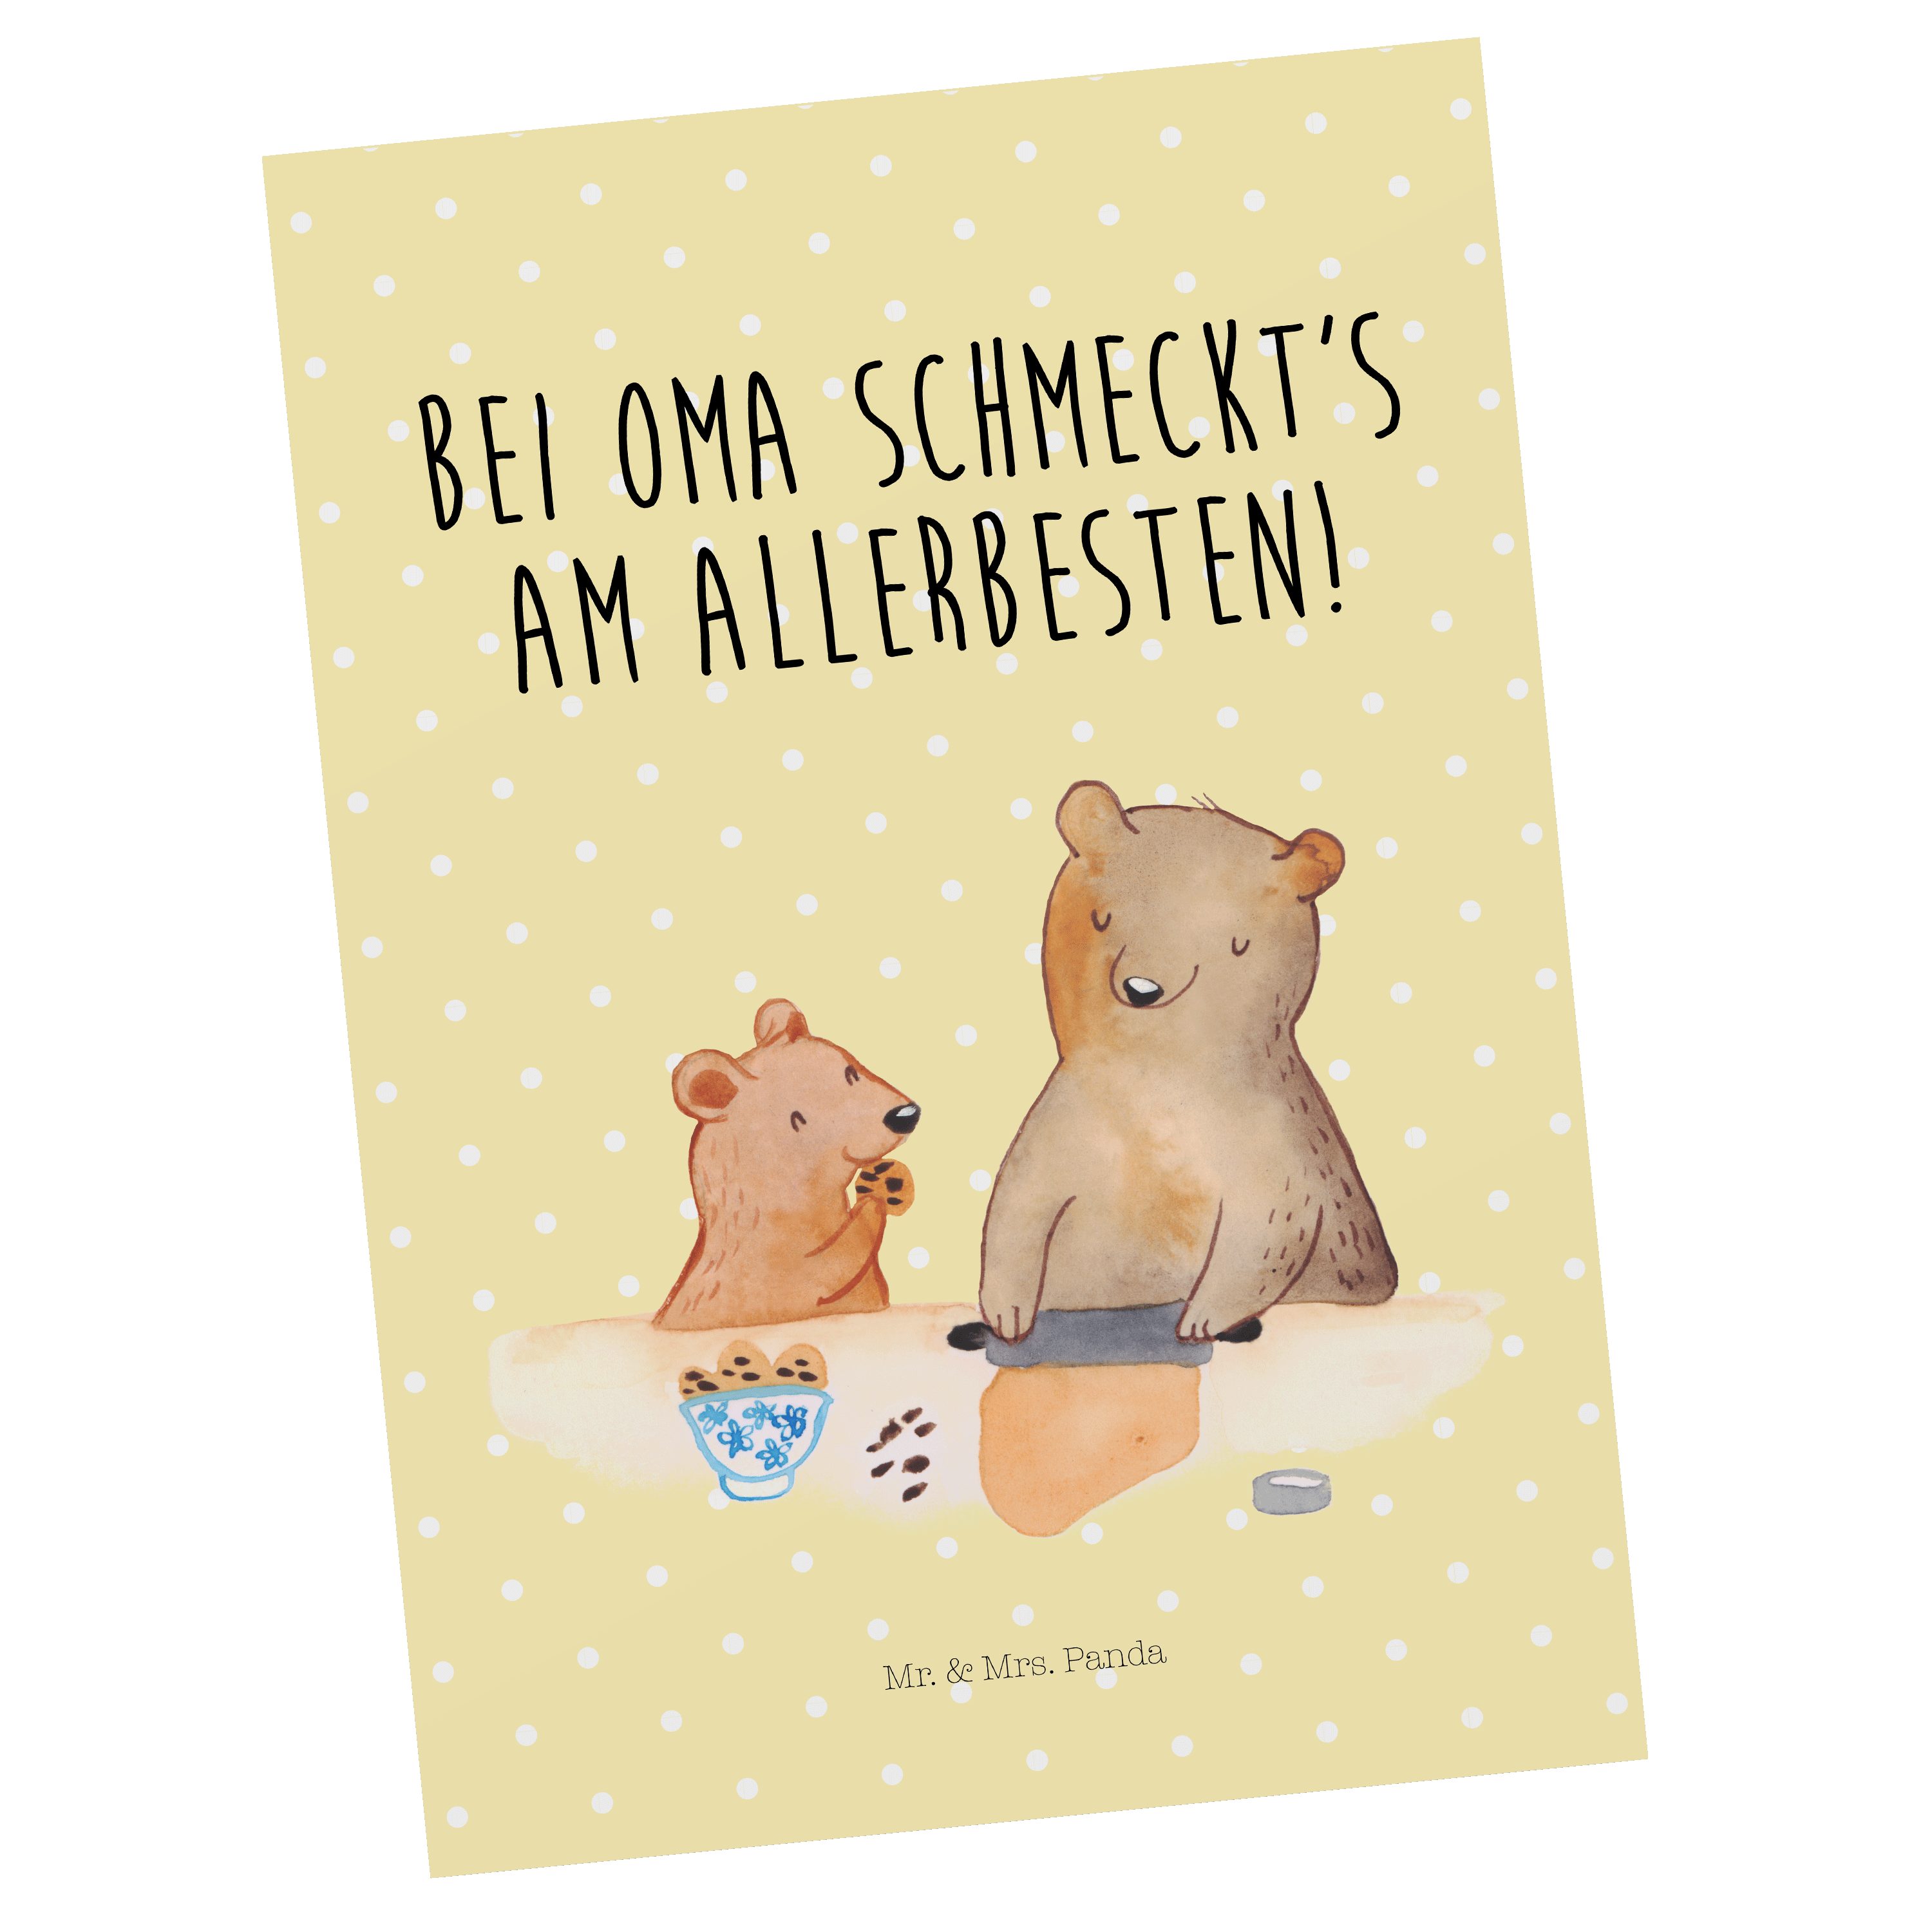 Mr. & Mrs. Panda Postkarte Oma Bär backen - Gelb Pastell - Geschenk, Vatertag, Opa, Schwester, E